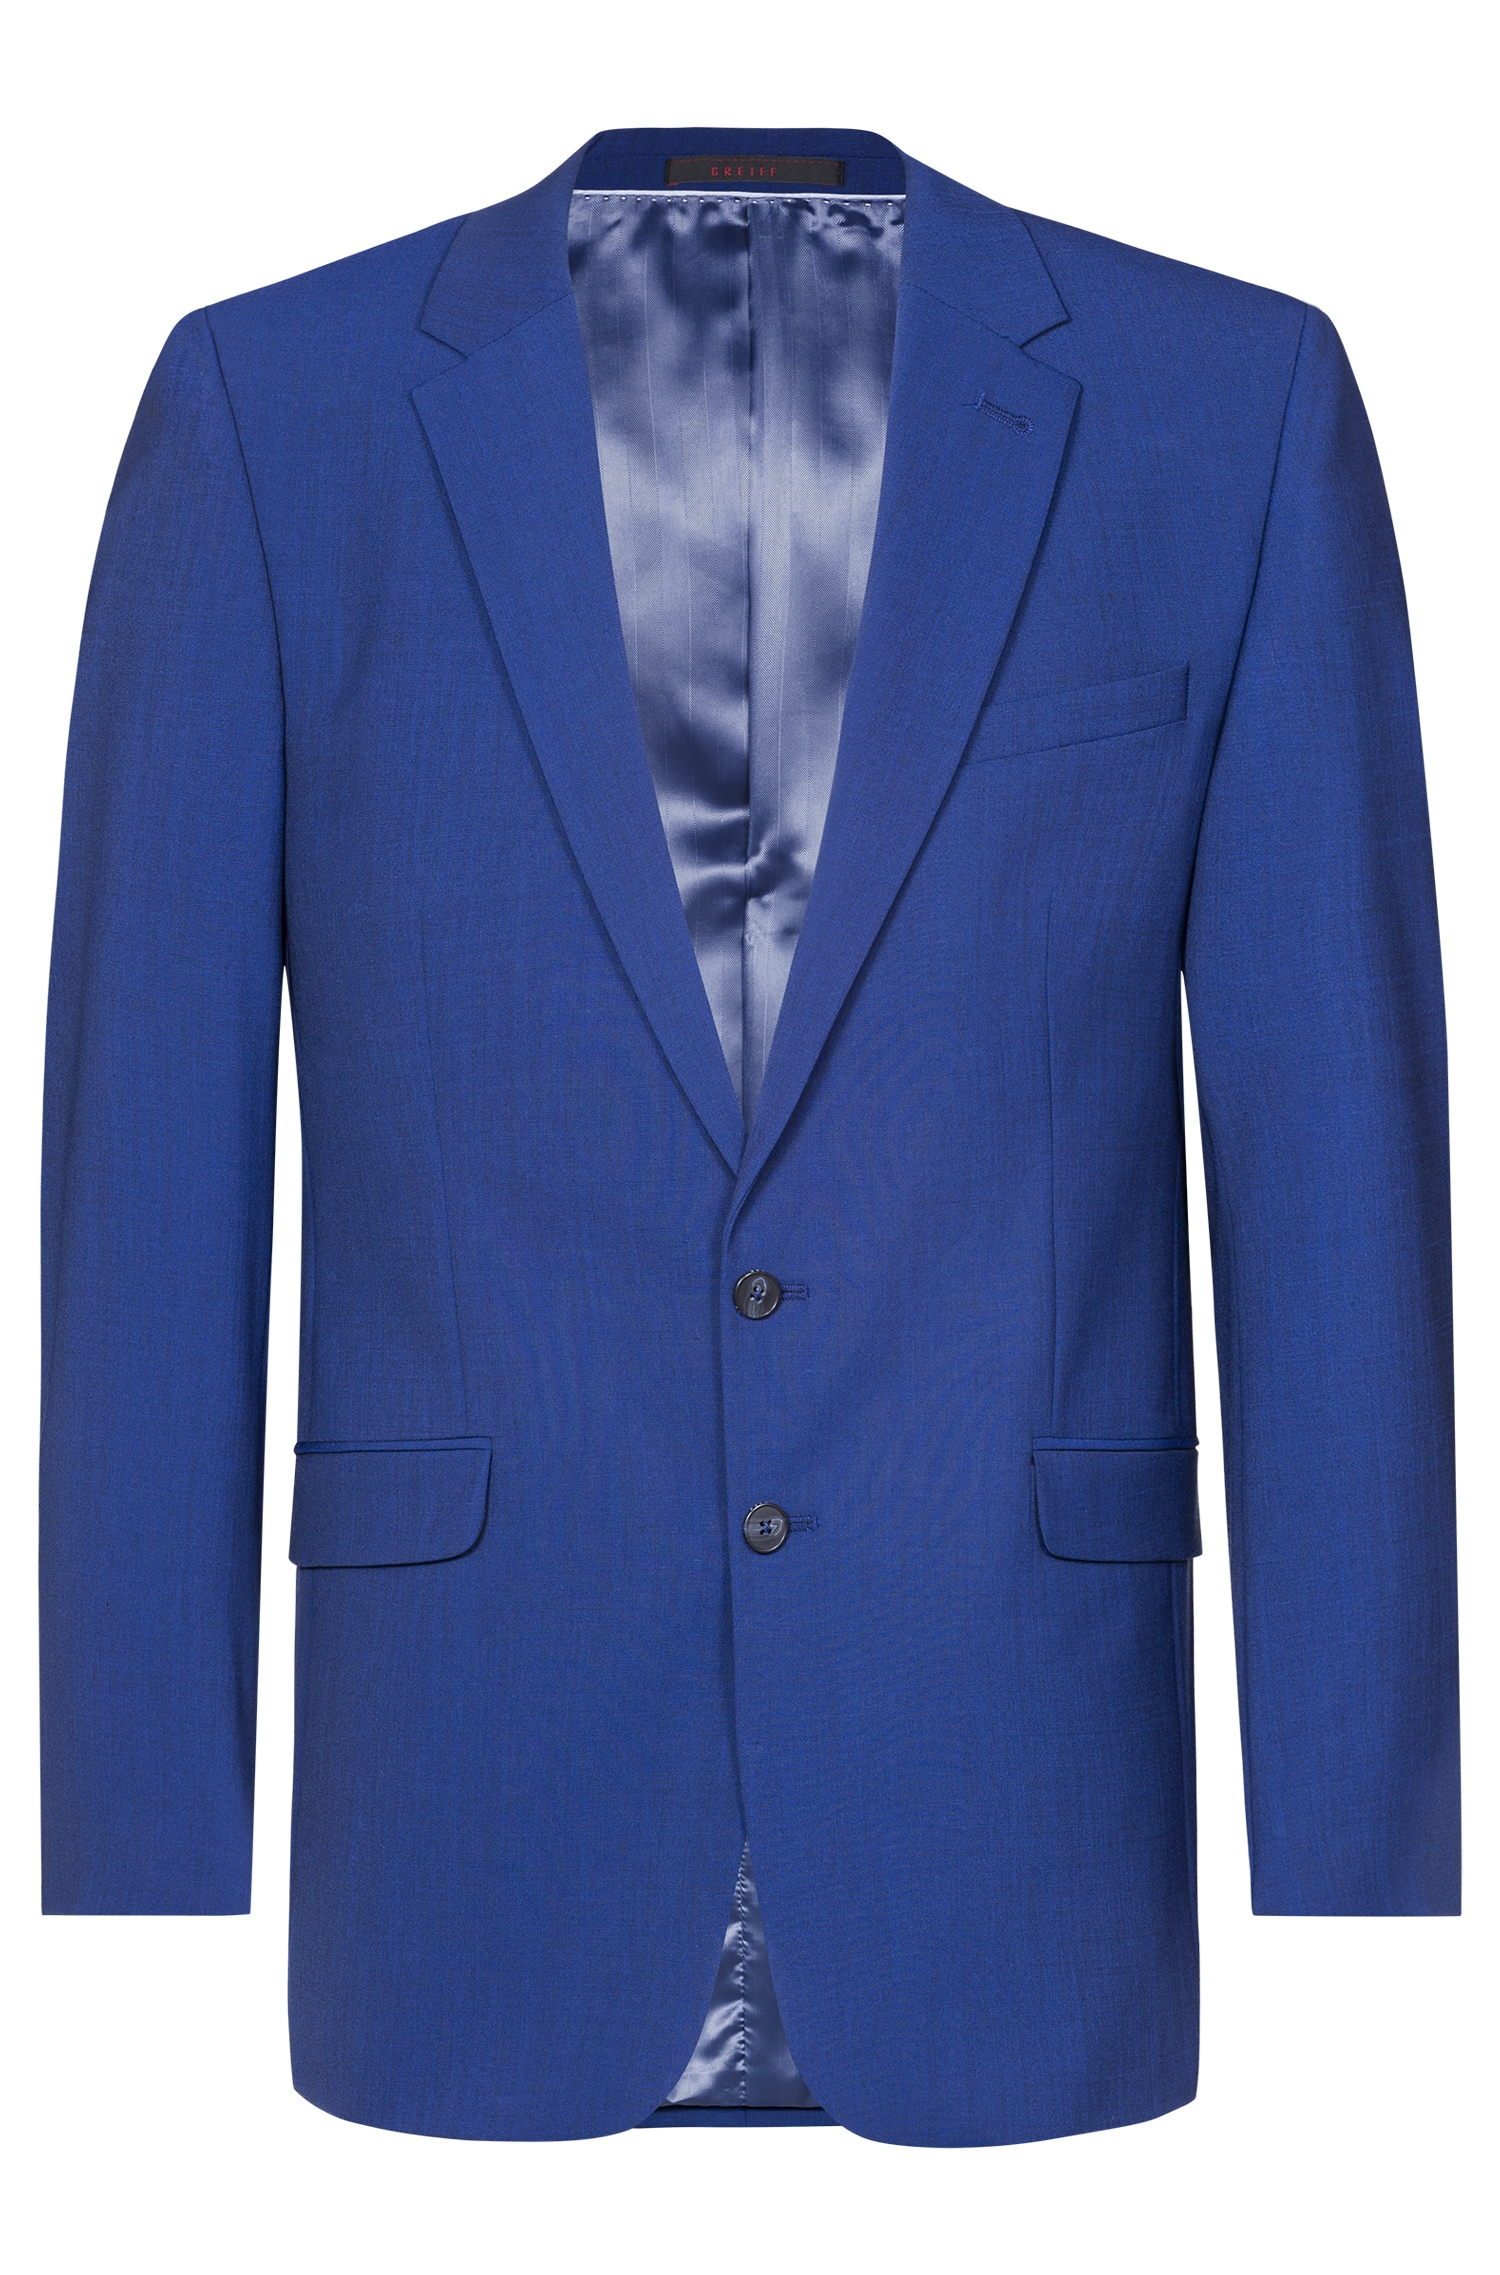 Men's jacket 2-button PREMIUM regular fit